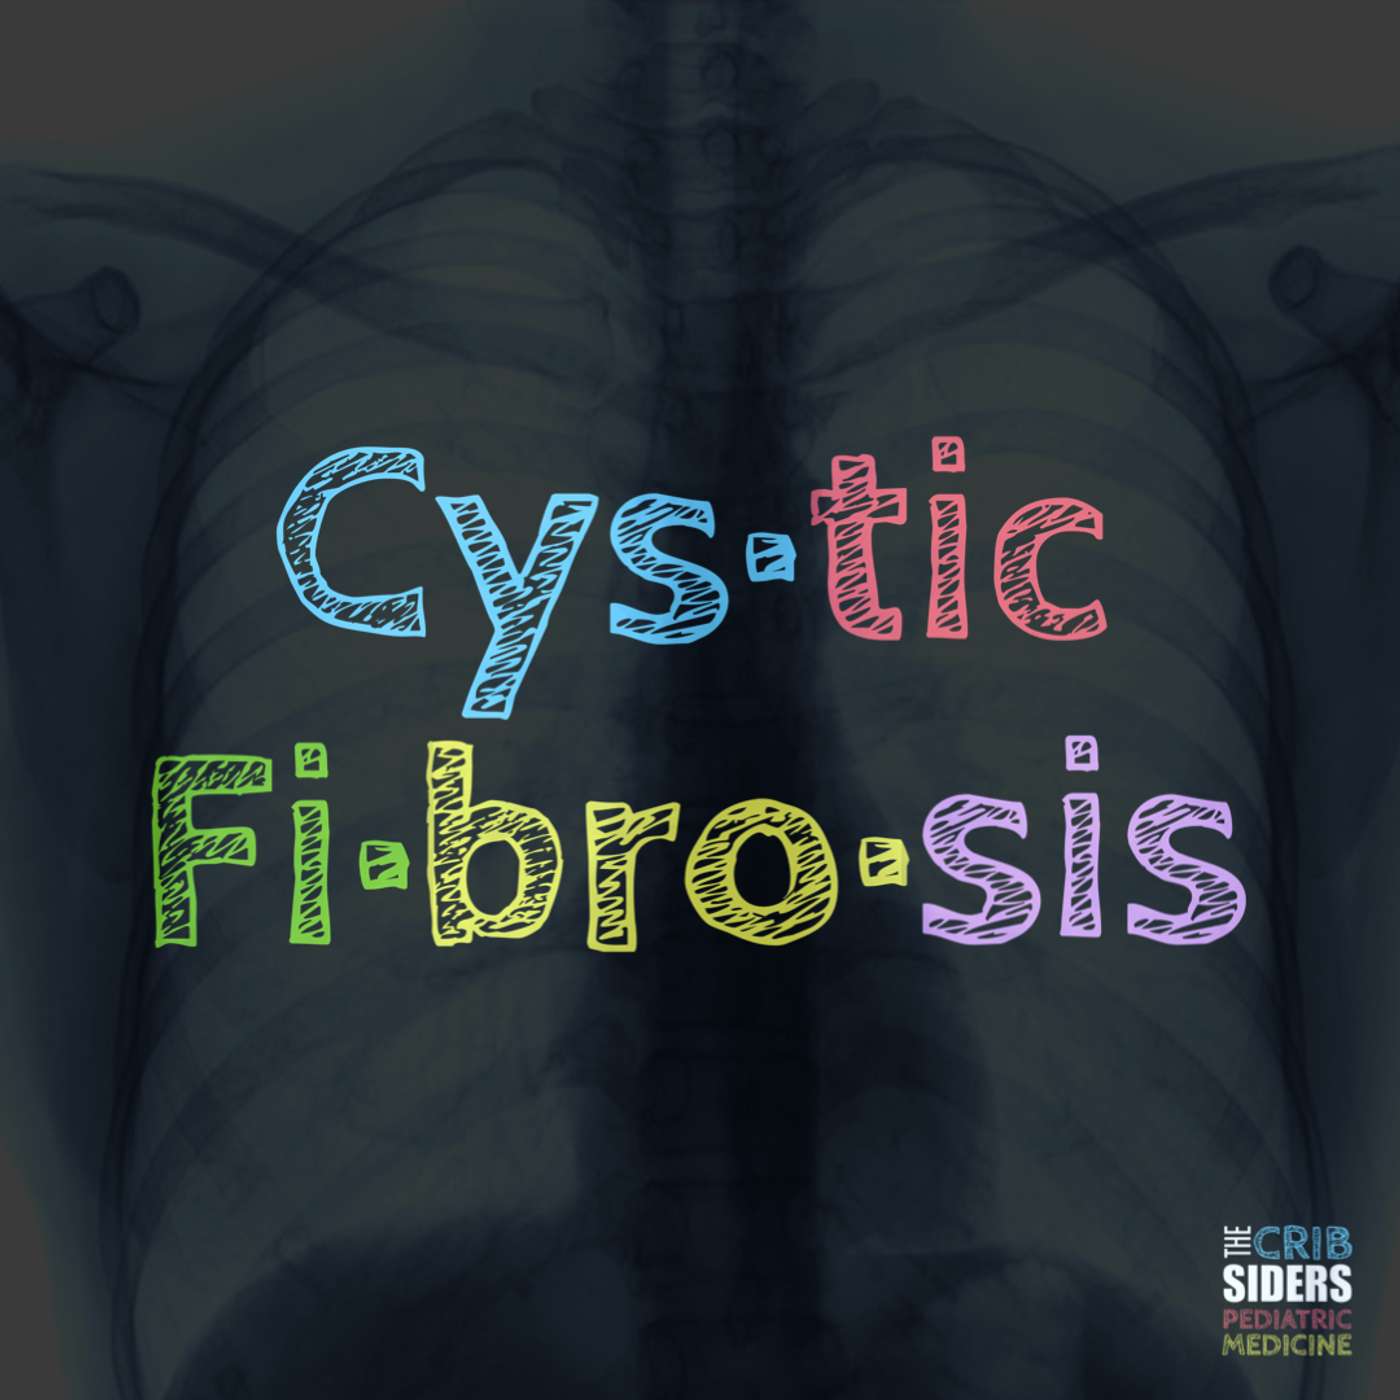 100: Cystic Fibrosis - Meet Elexacaftor, Tezacaftor, and Ivacaftor